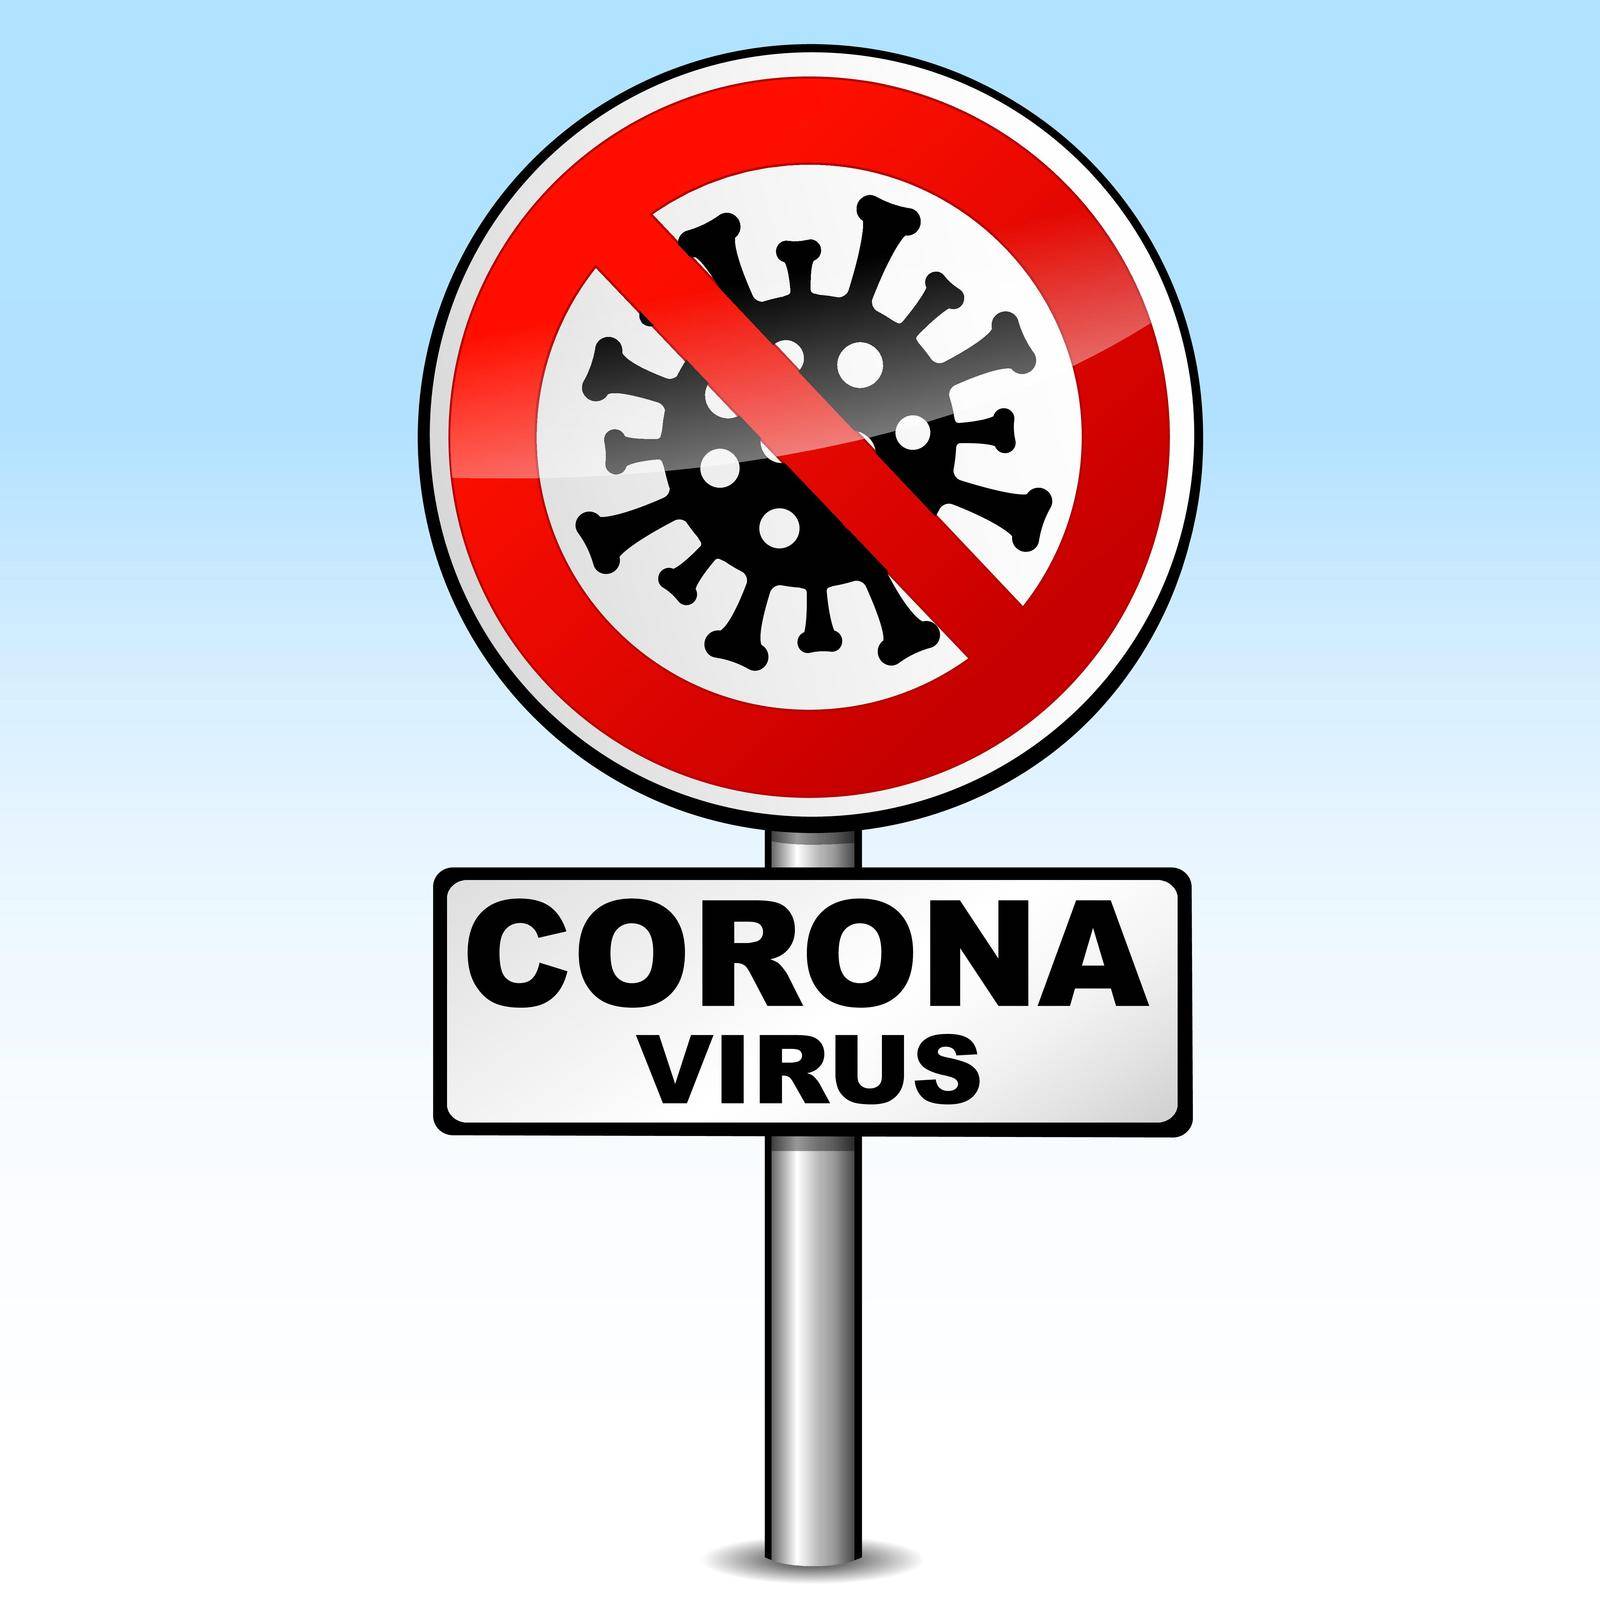 Vector illustration of corona virus road sign